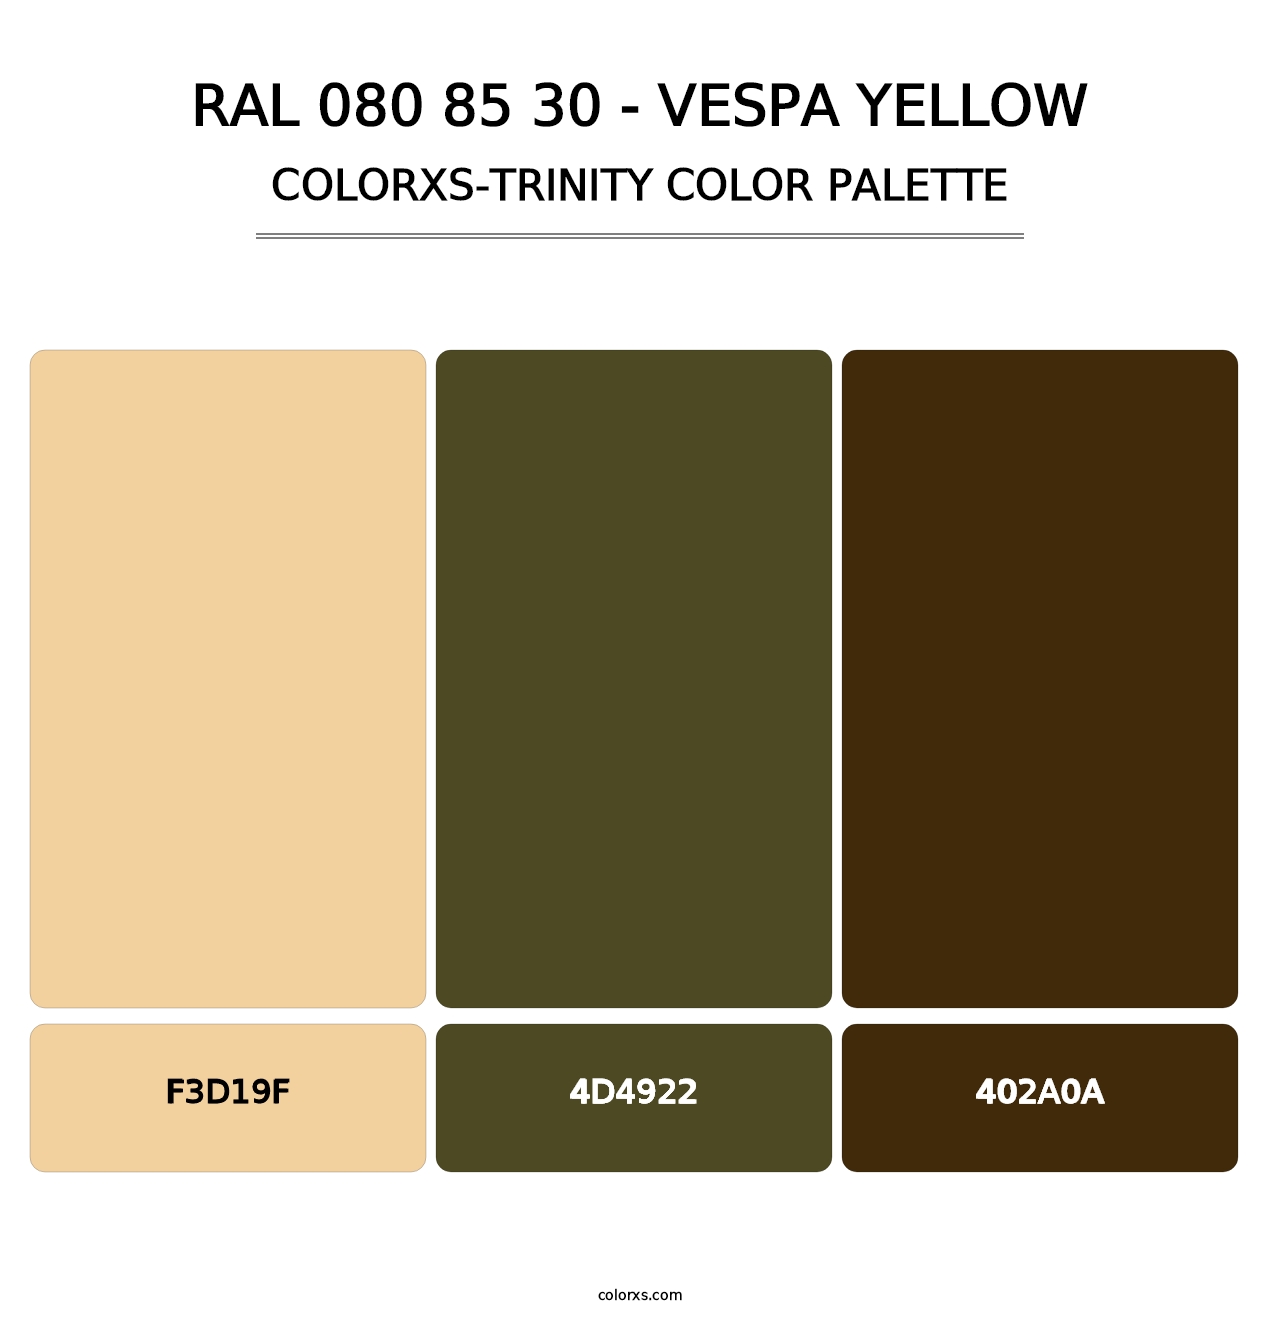 RAL 080 85 30 - Vespa Yellow - Colorxs Trinity Palette